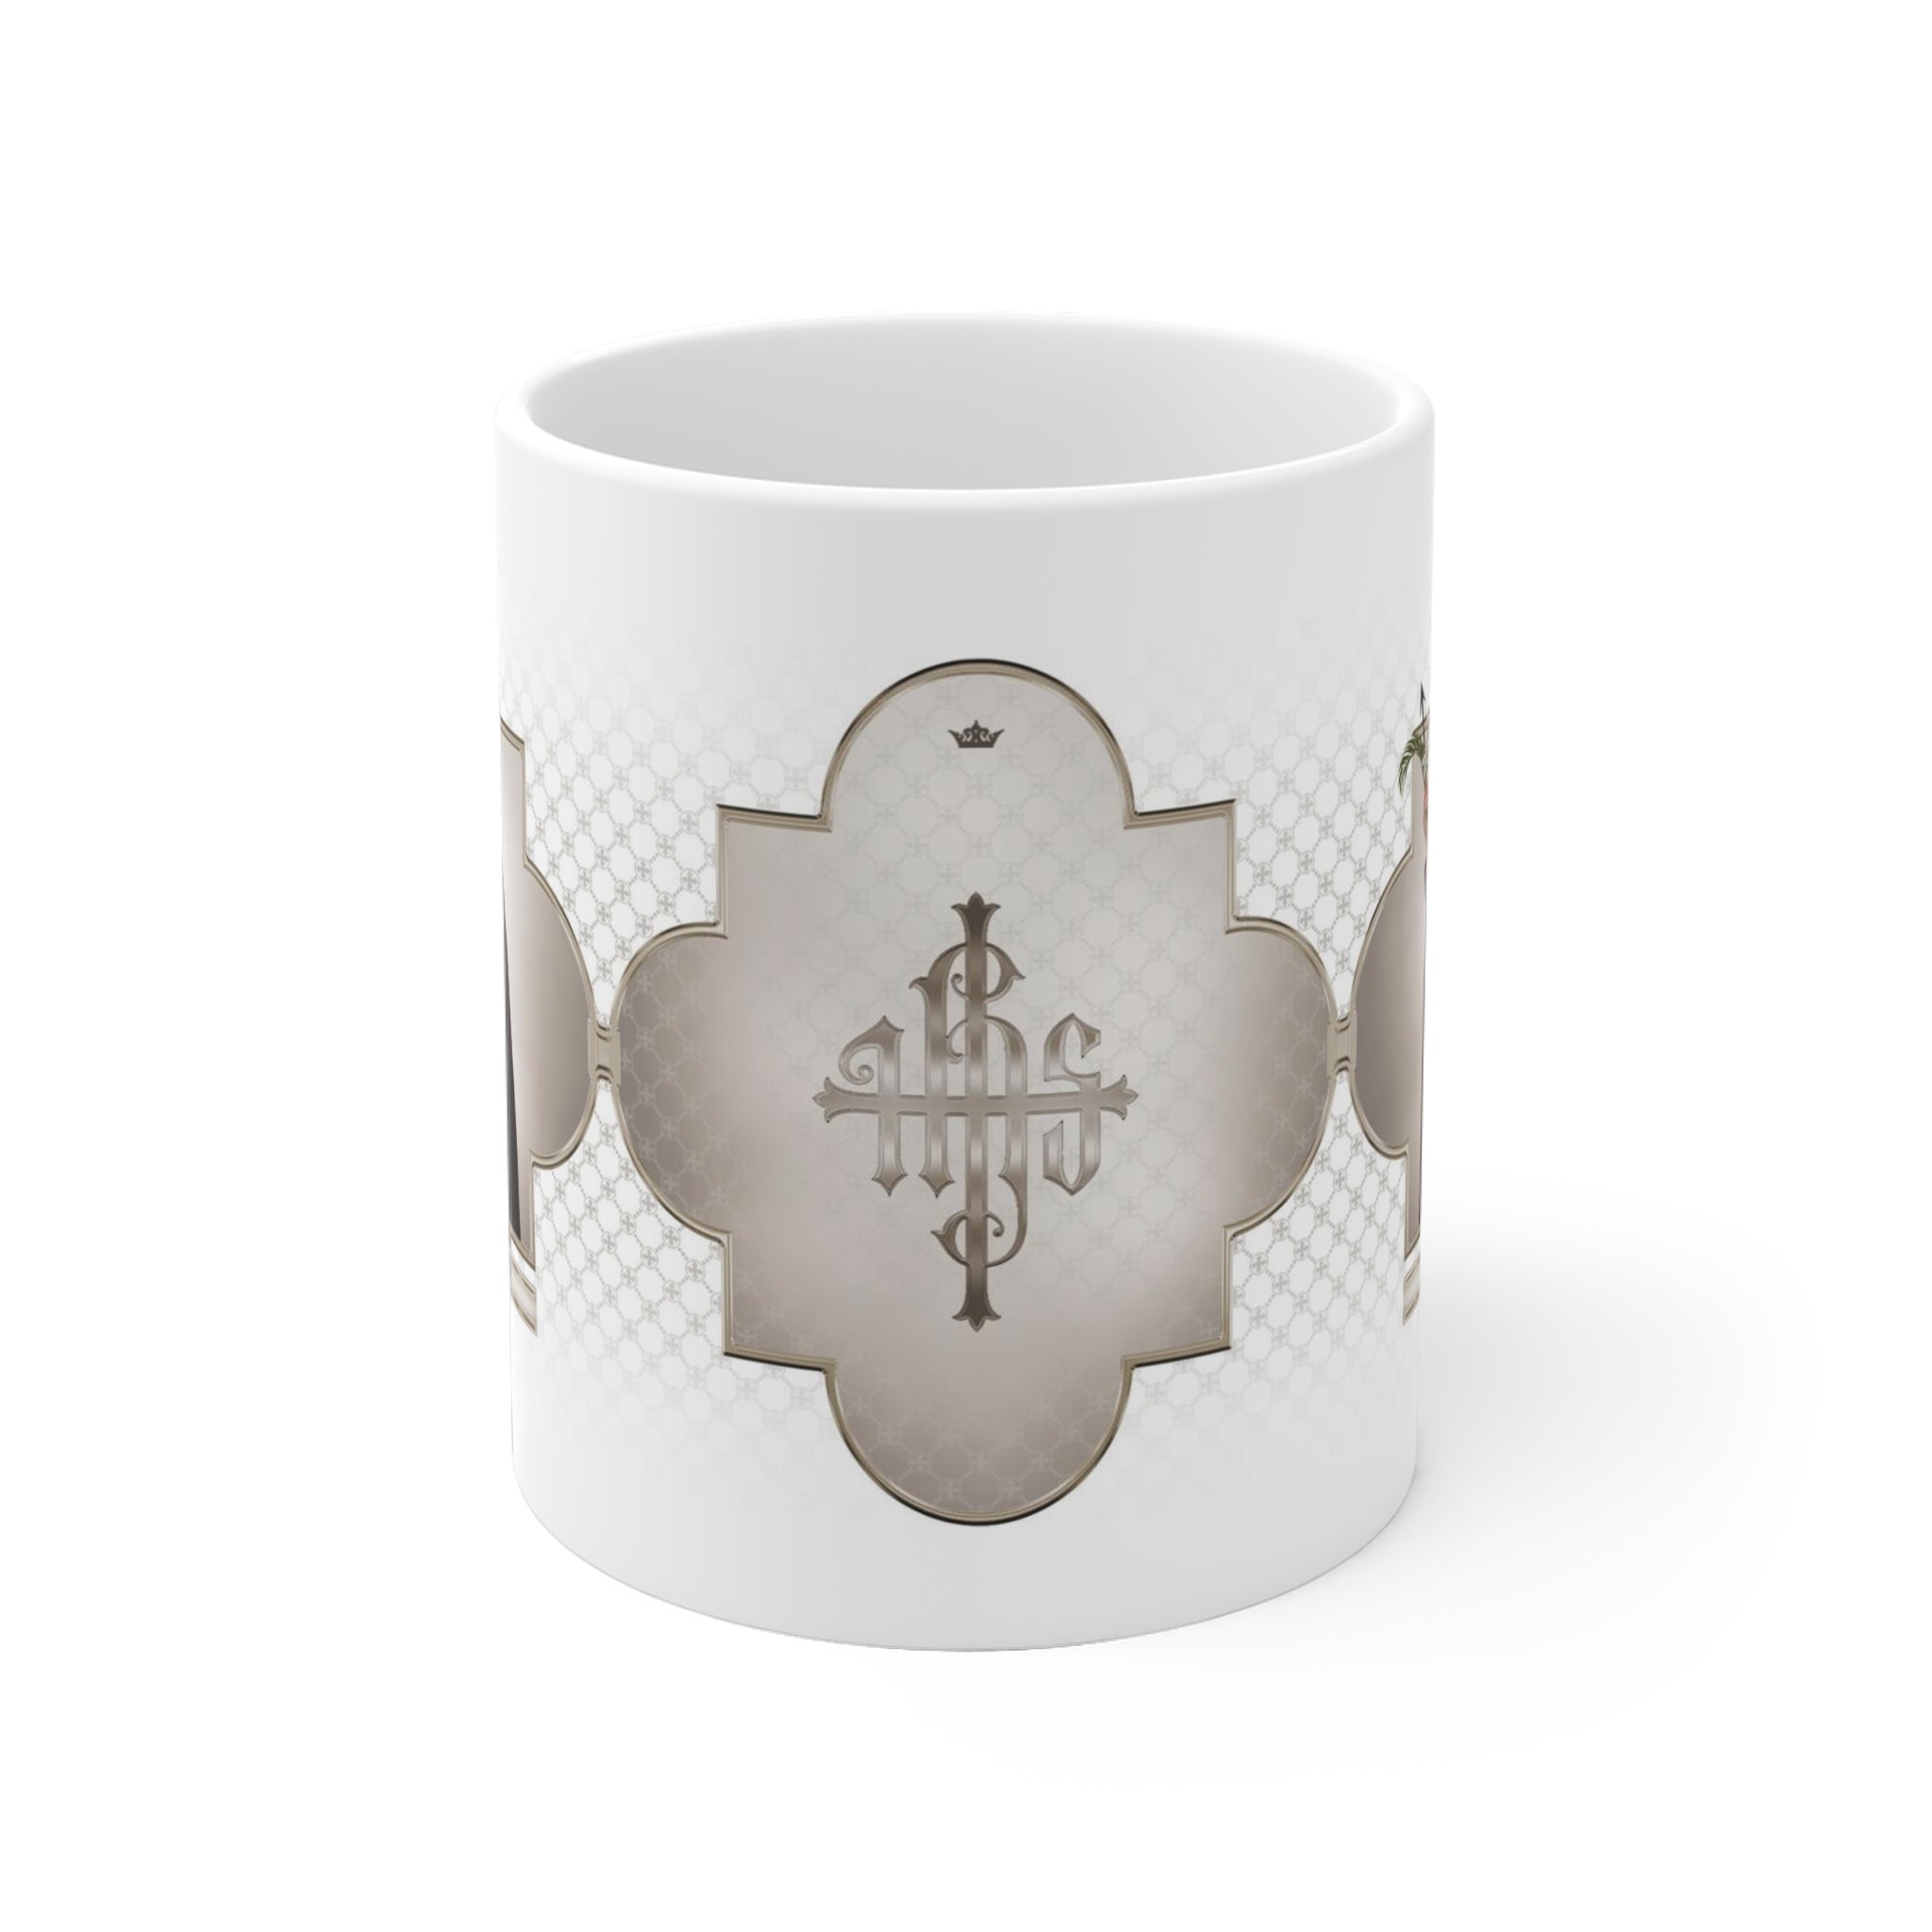 St. Philomena Ceramic Mug - VENXARA®